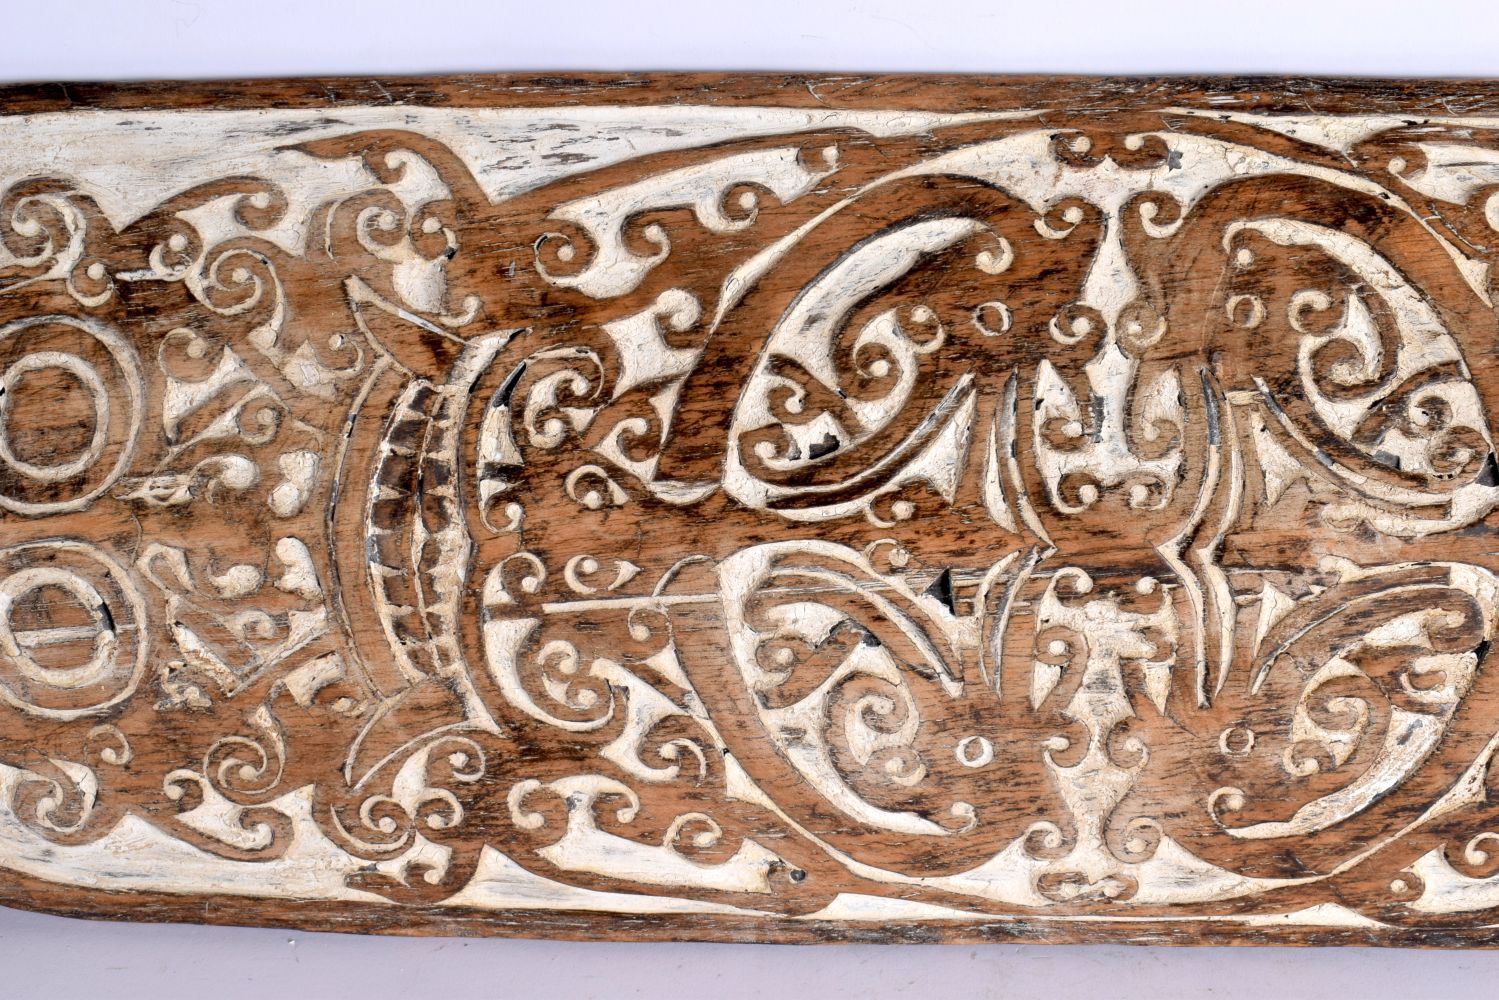 A LARGE VINTAGE TRIBAL CARVED WOOD SHIELD possibly Dayak. 130 cm x 24 cm. - Image 4 of 7